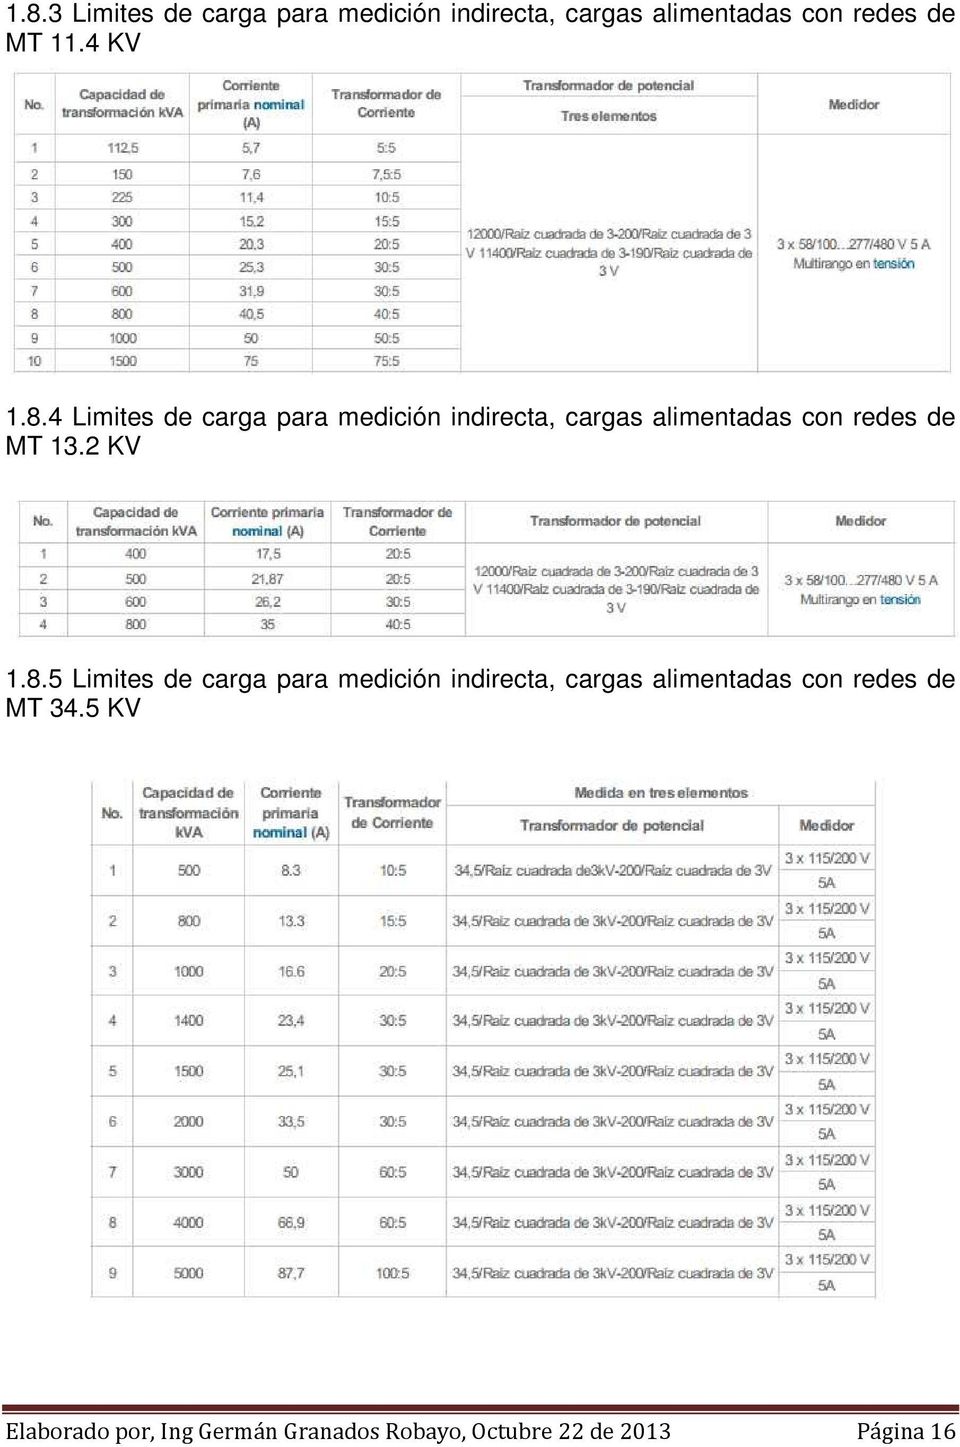 4 Limites de carga para medición indirecta, cargas alimentadas con redes de MT 13.